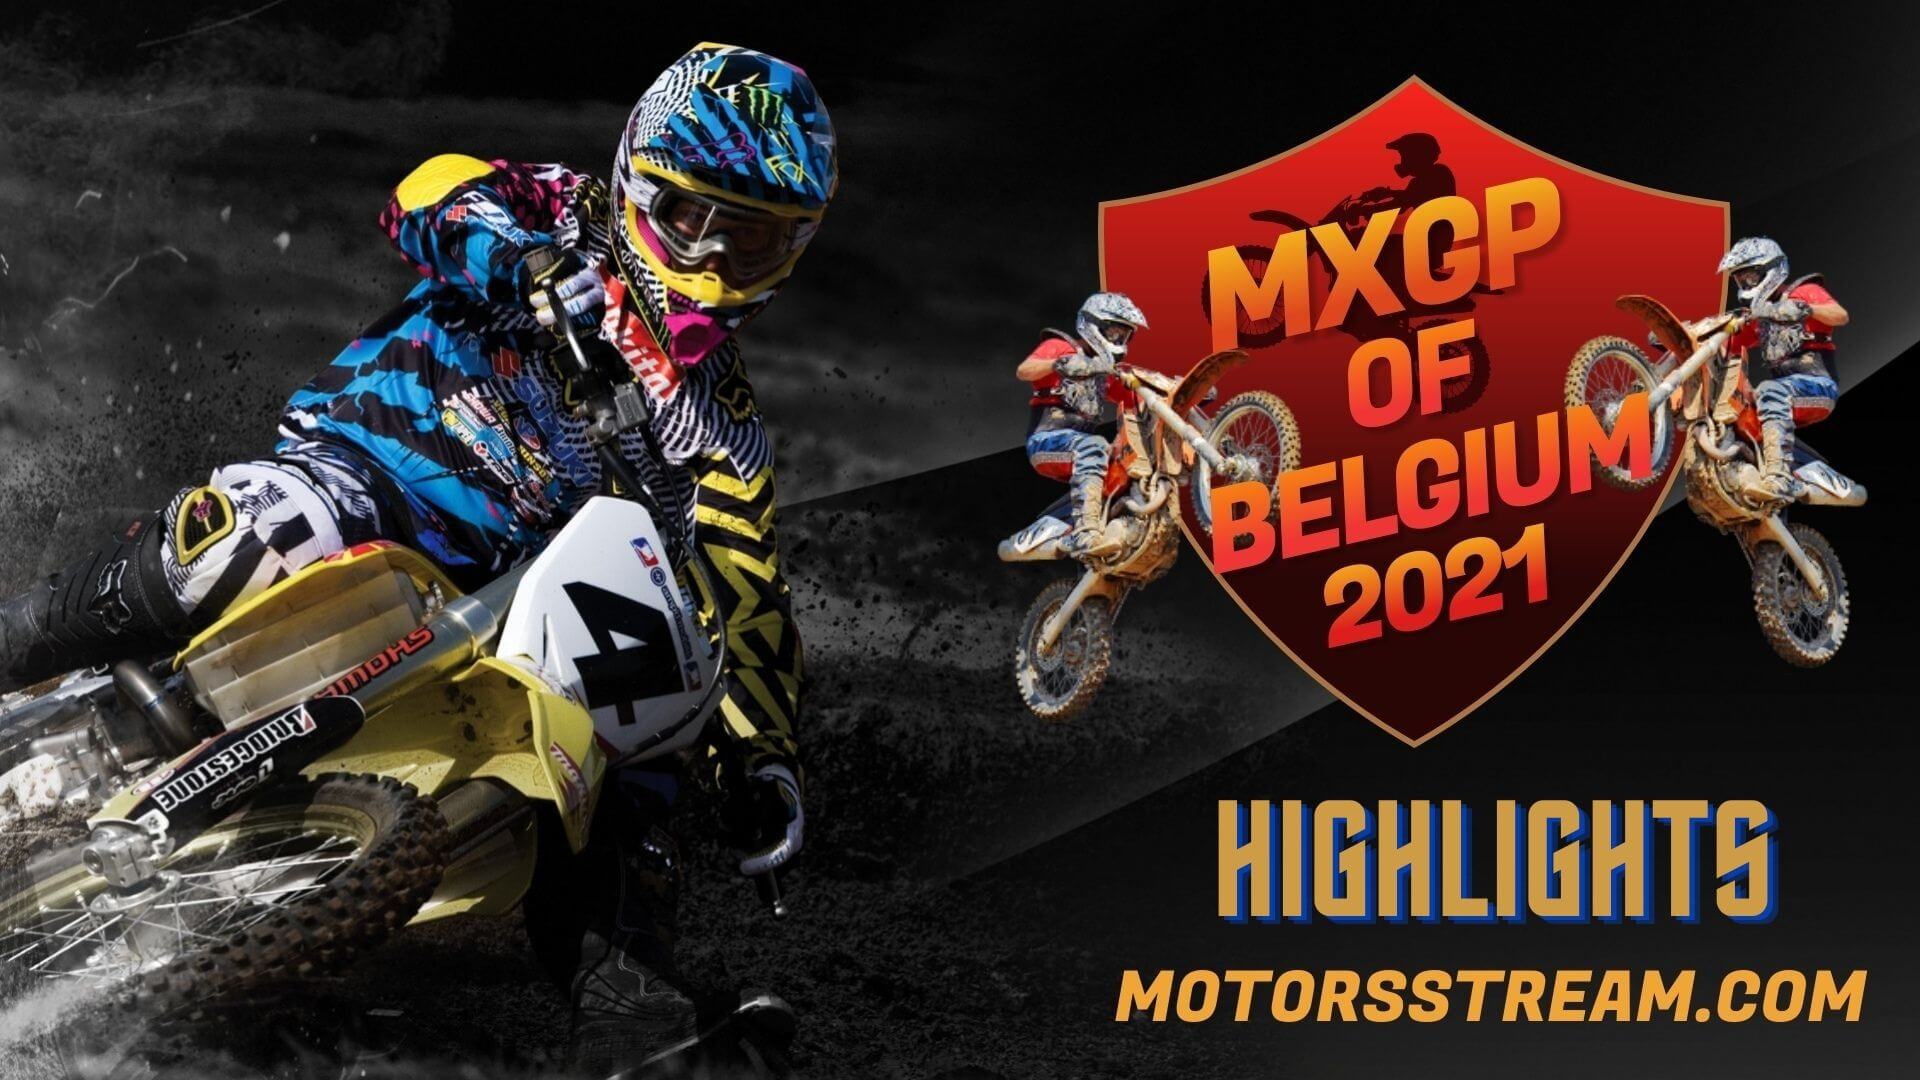 FIM Motocross WC Flanders Belgium Highlight 2021 MXGP